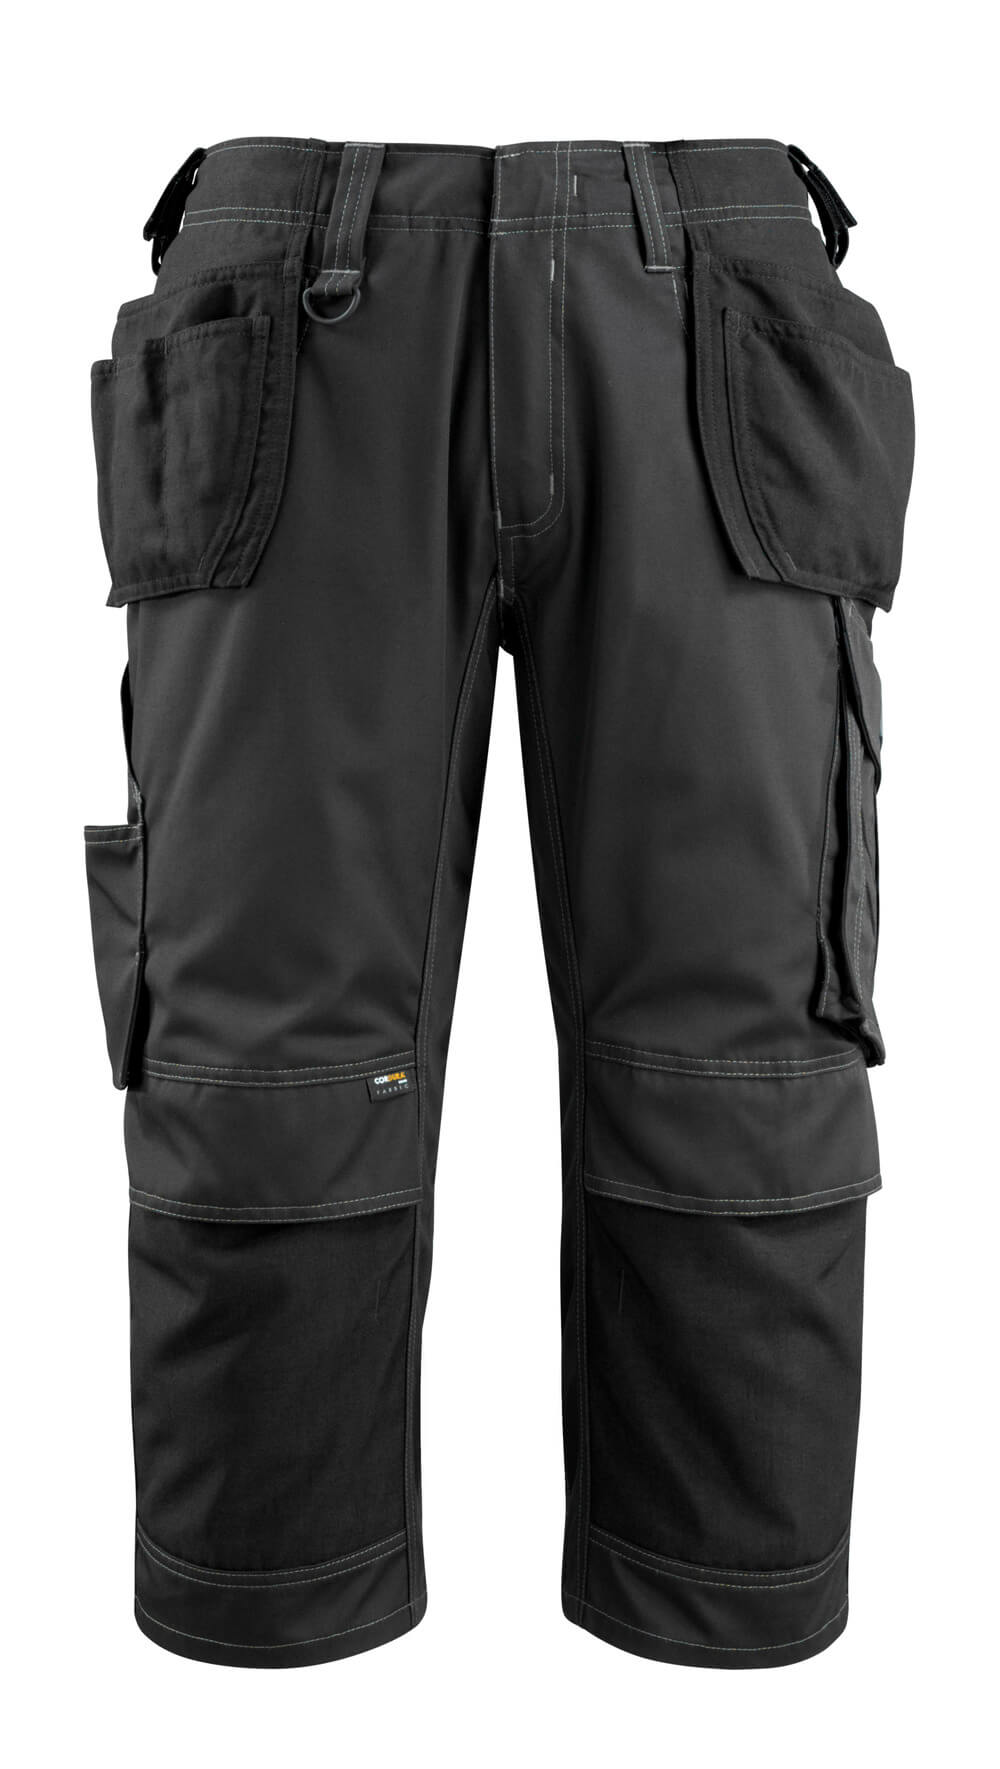 Blaklader 3/4 Length KneePad Shorts with Nail Pockets -1501 1310 Cotton Canvas 